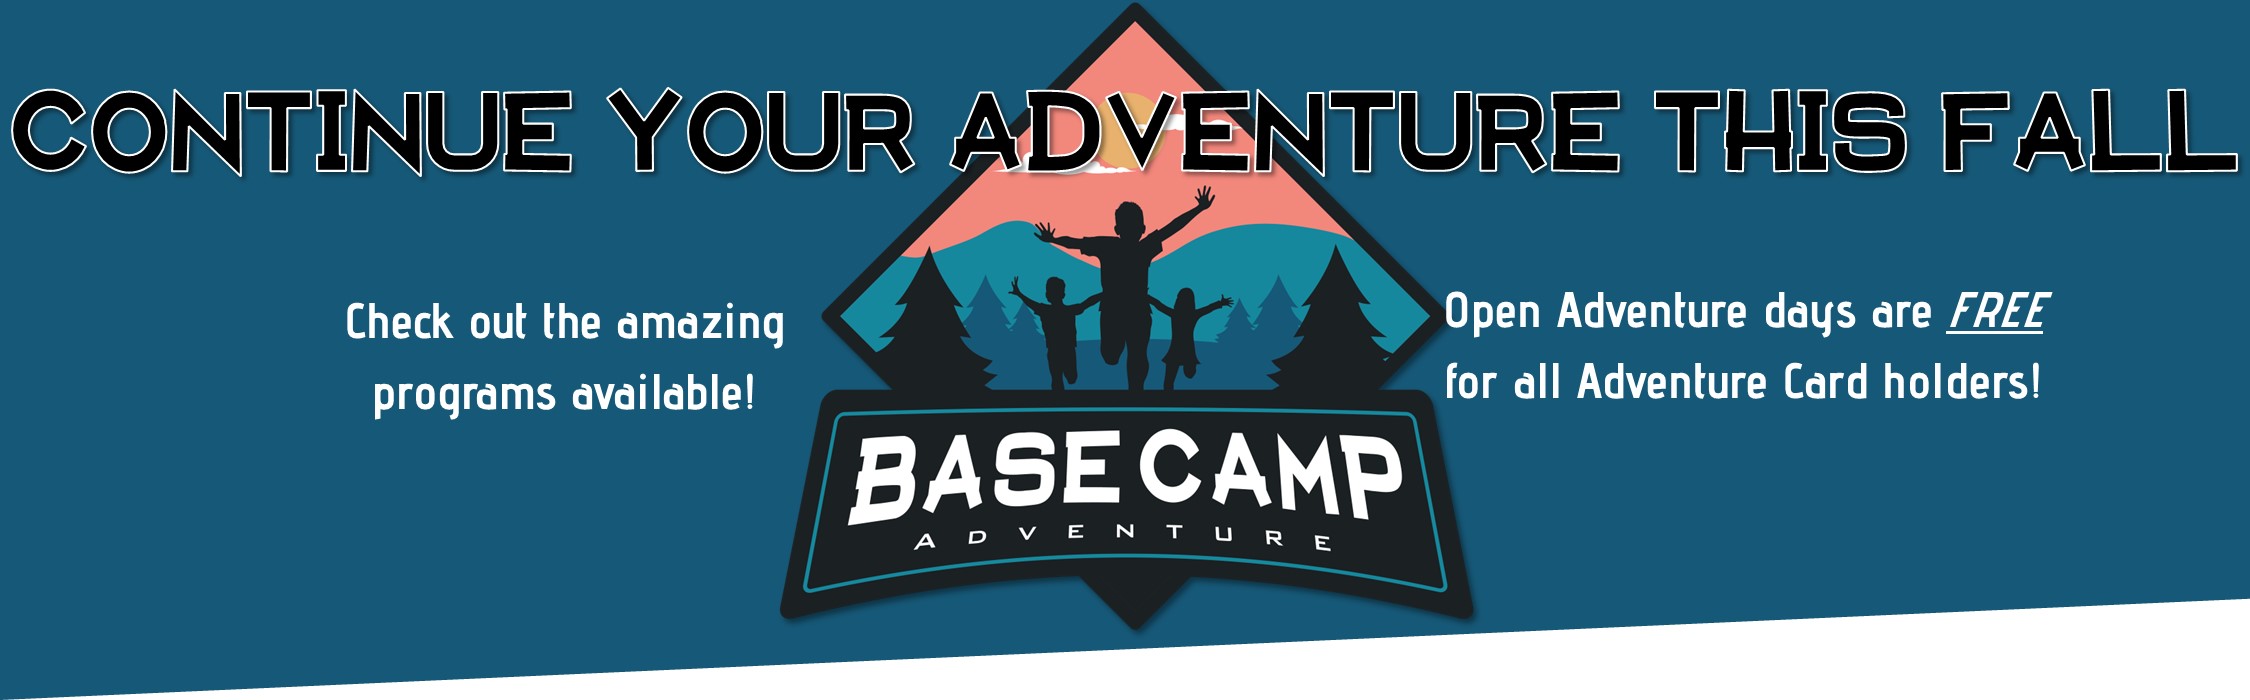 Adventure Base Camp